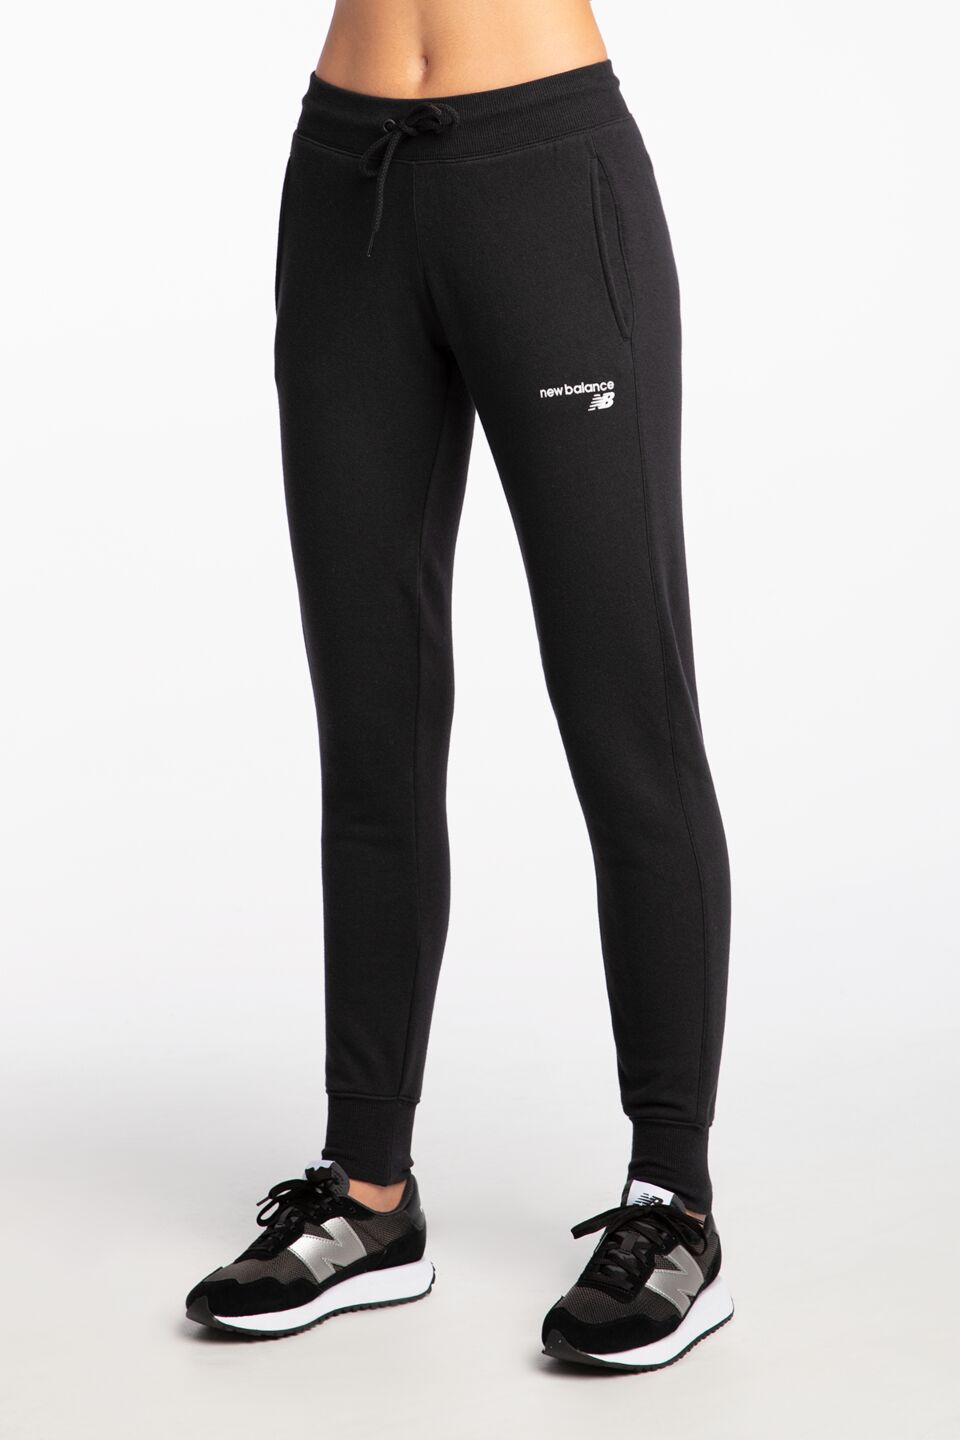 New Balance Classic Core Fleece Pant